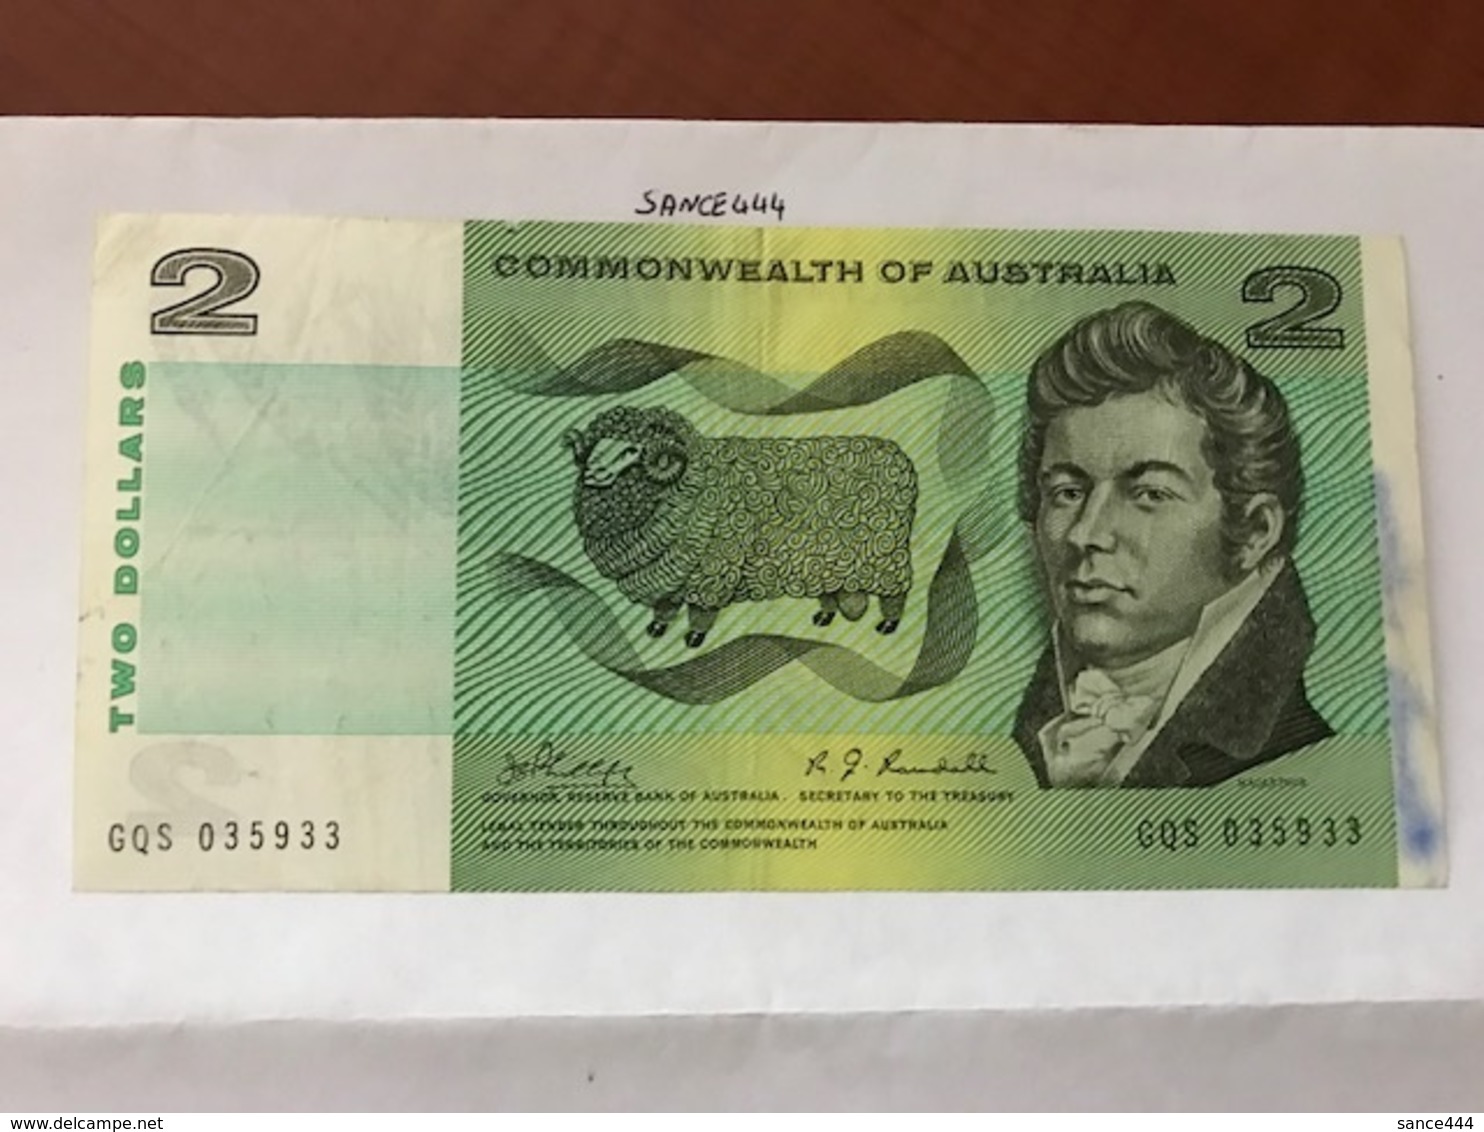 Australia Two Dollars Banknote - 1974-94 Australia Reserve Bank